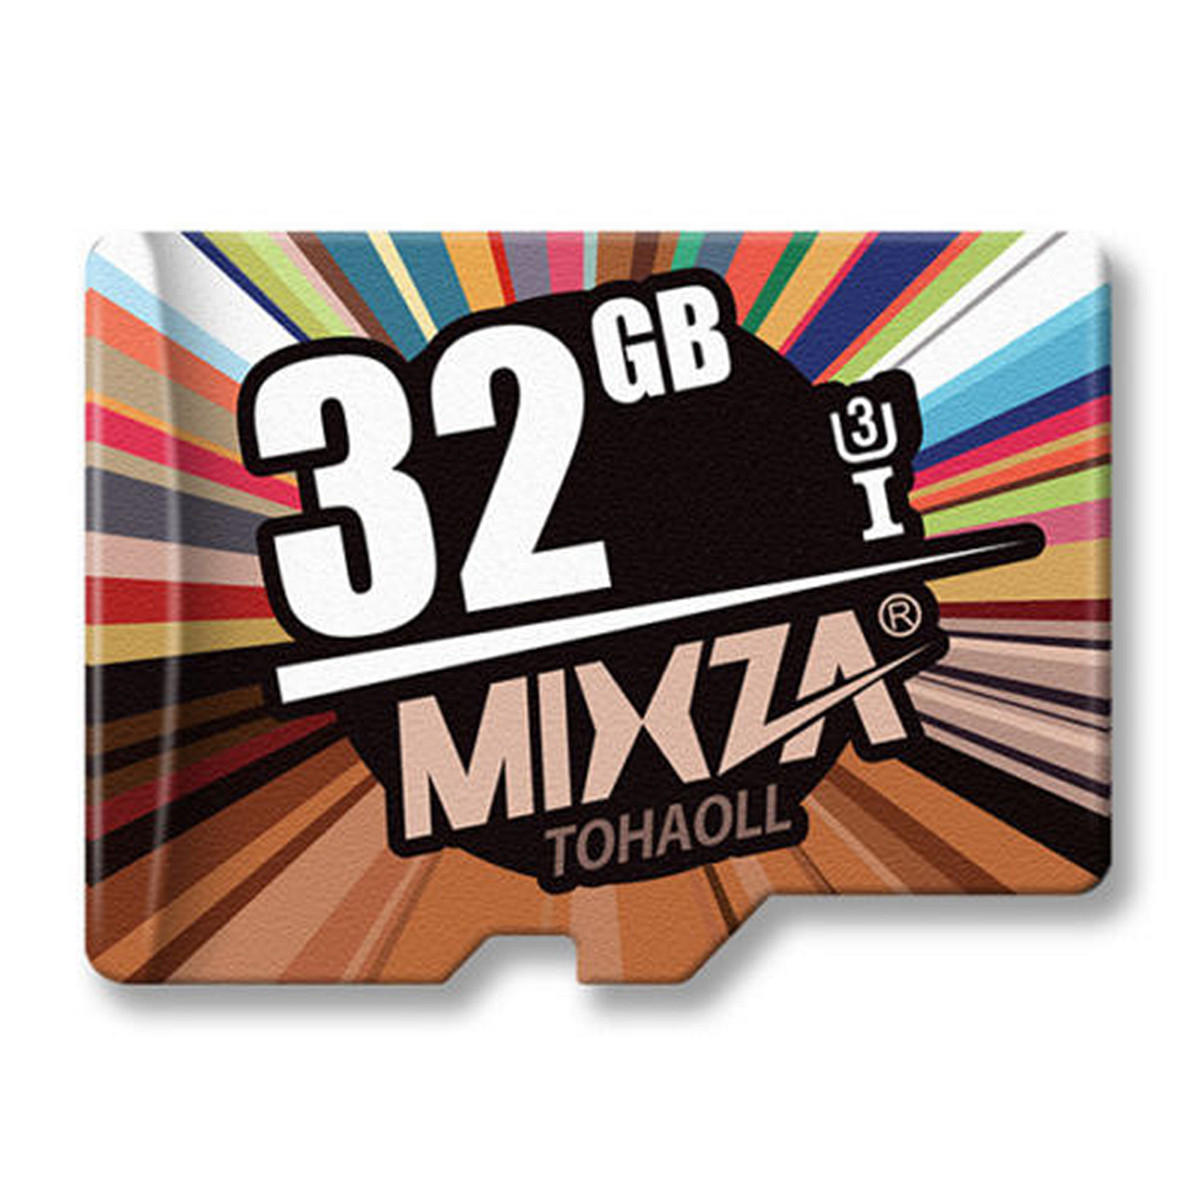 MIXZA Fashion Edition U3 Klasse 10 32GB TF Micro-geheugenkaart voor DSLR digitale camera MP3 HIFI Sp